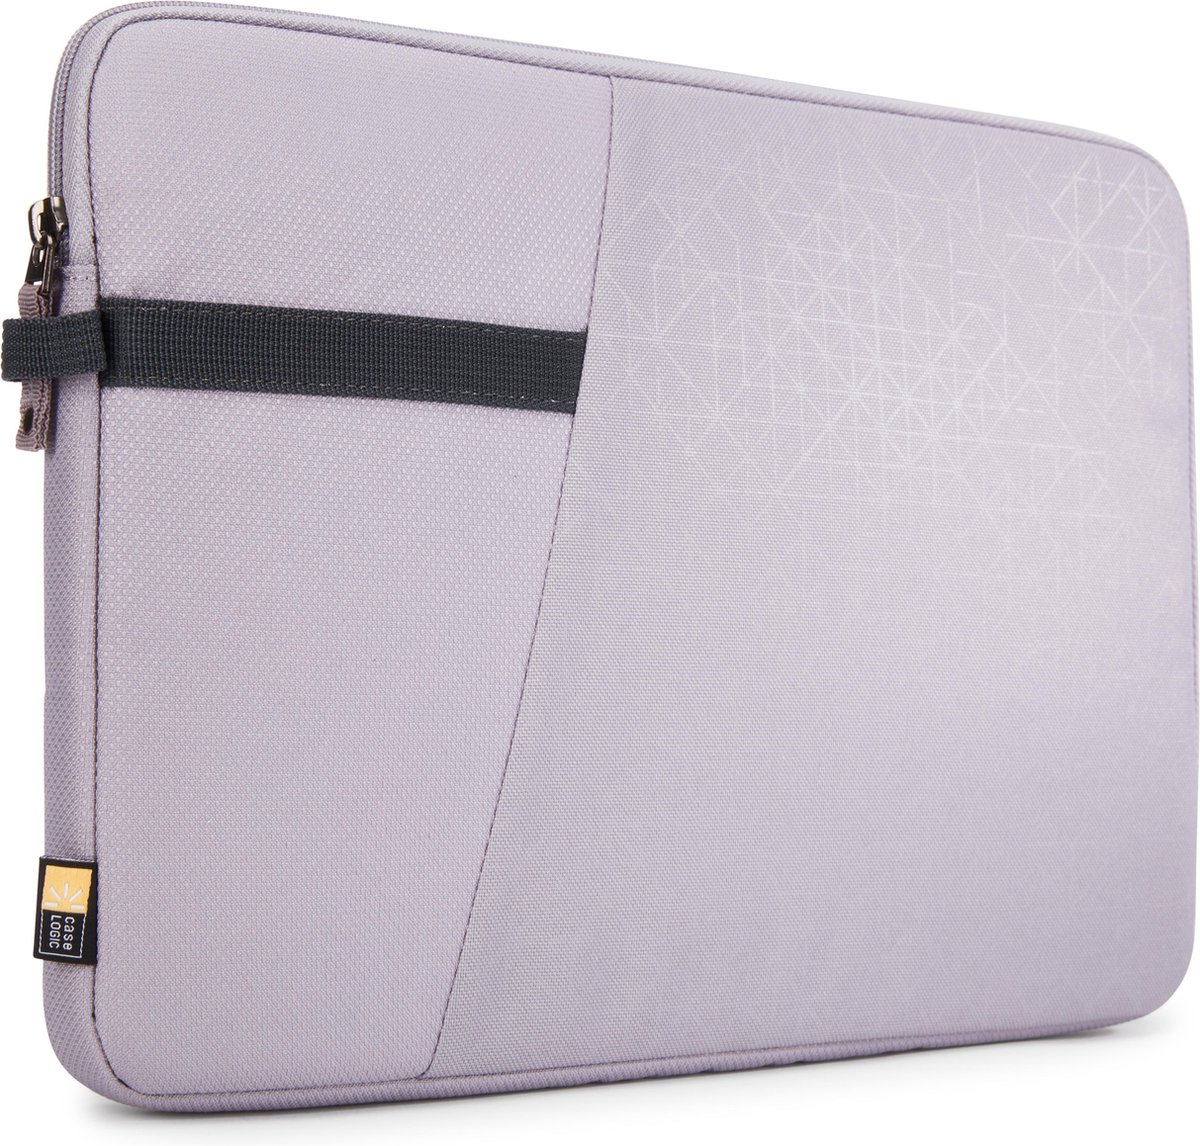 Case Logic Ibira - Laptophoes / Sleeve 13.3 inch - Minimal Gray